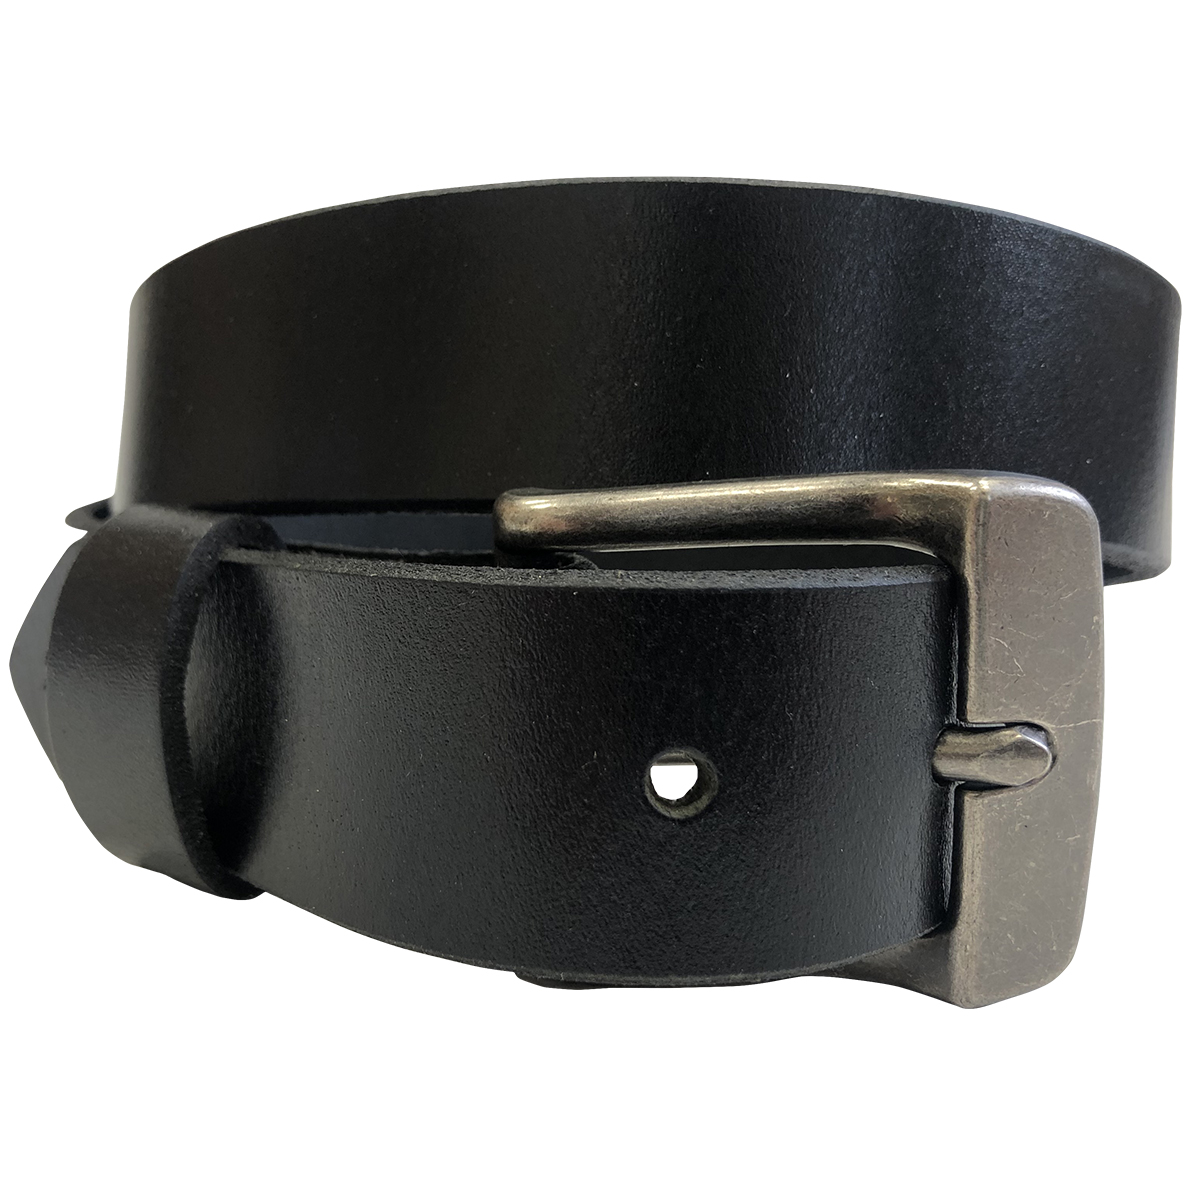 1.25"(32mm) Men's Black Bridle Leather Belt Handmade in Canada by Zelikovitz Size: 34 for 32" Waist - image 1 of 1